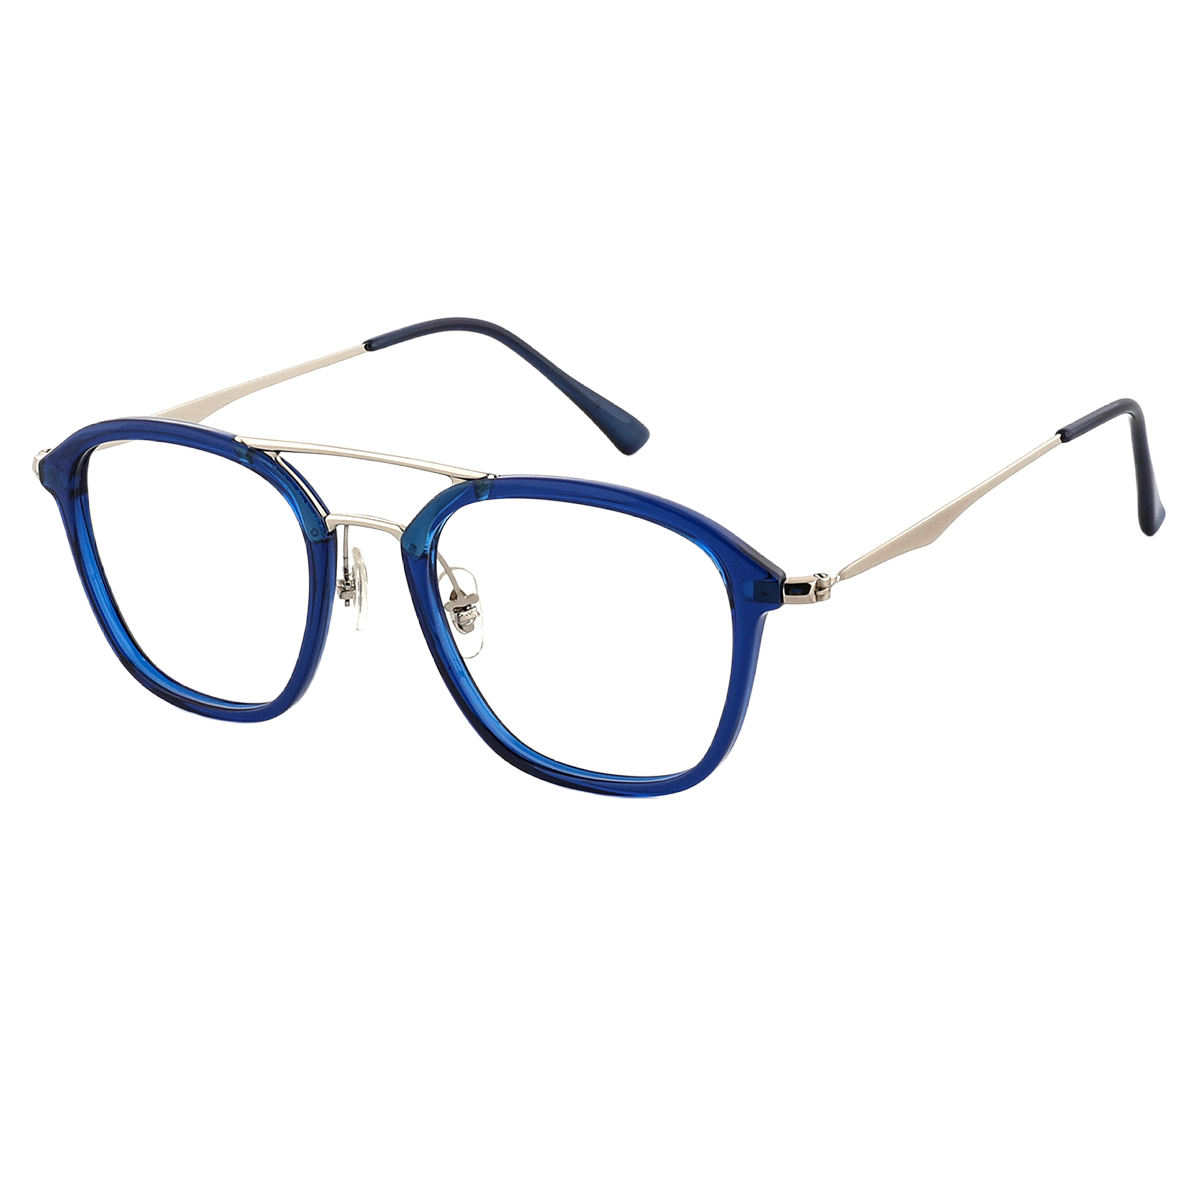 Gallaic - Aviator Silver-blue Reading Glasses for Men & Women